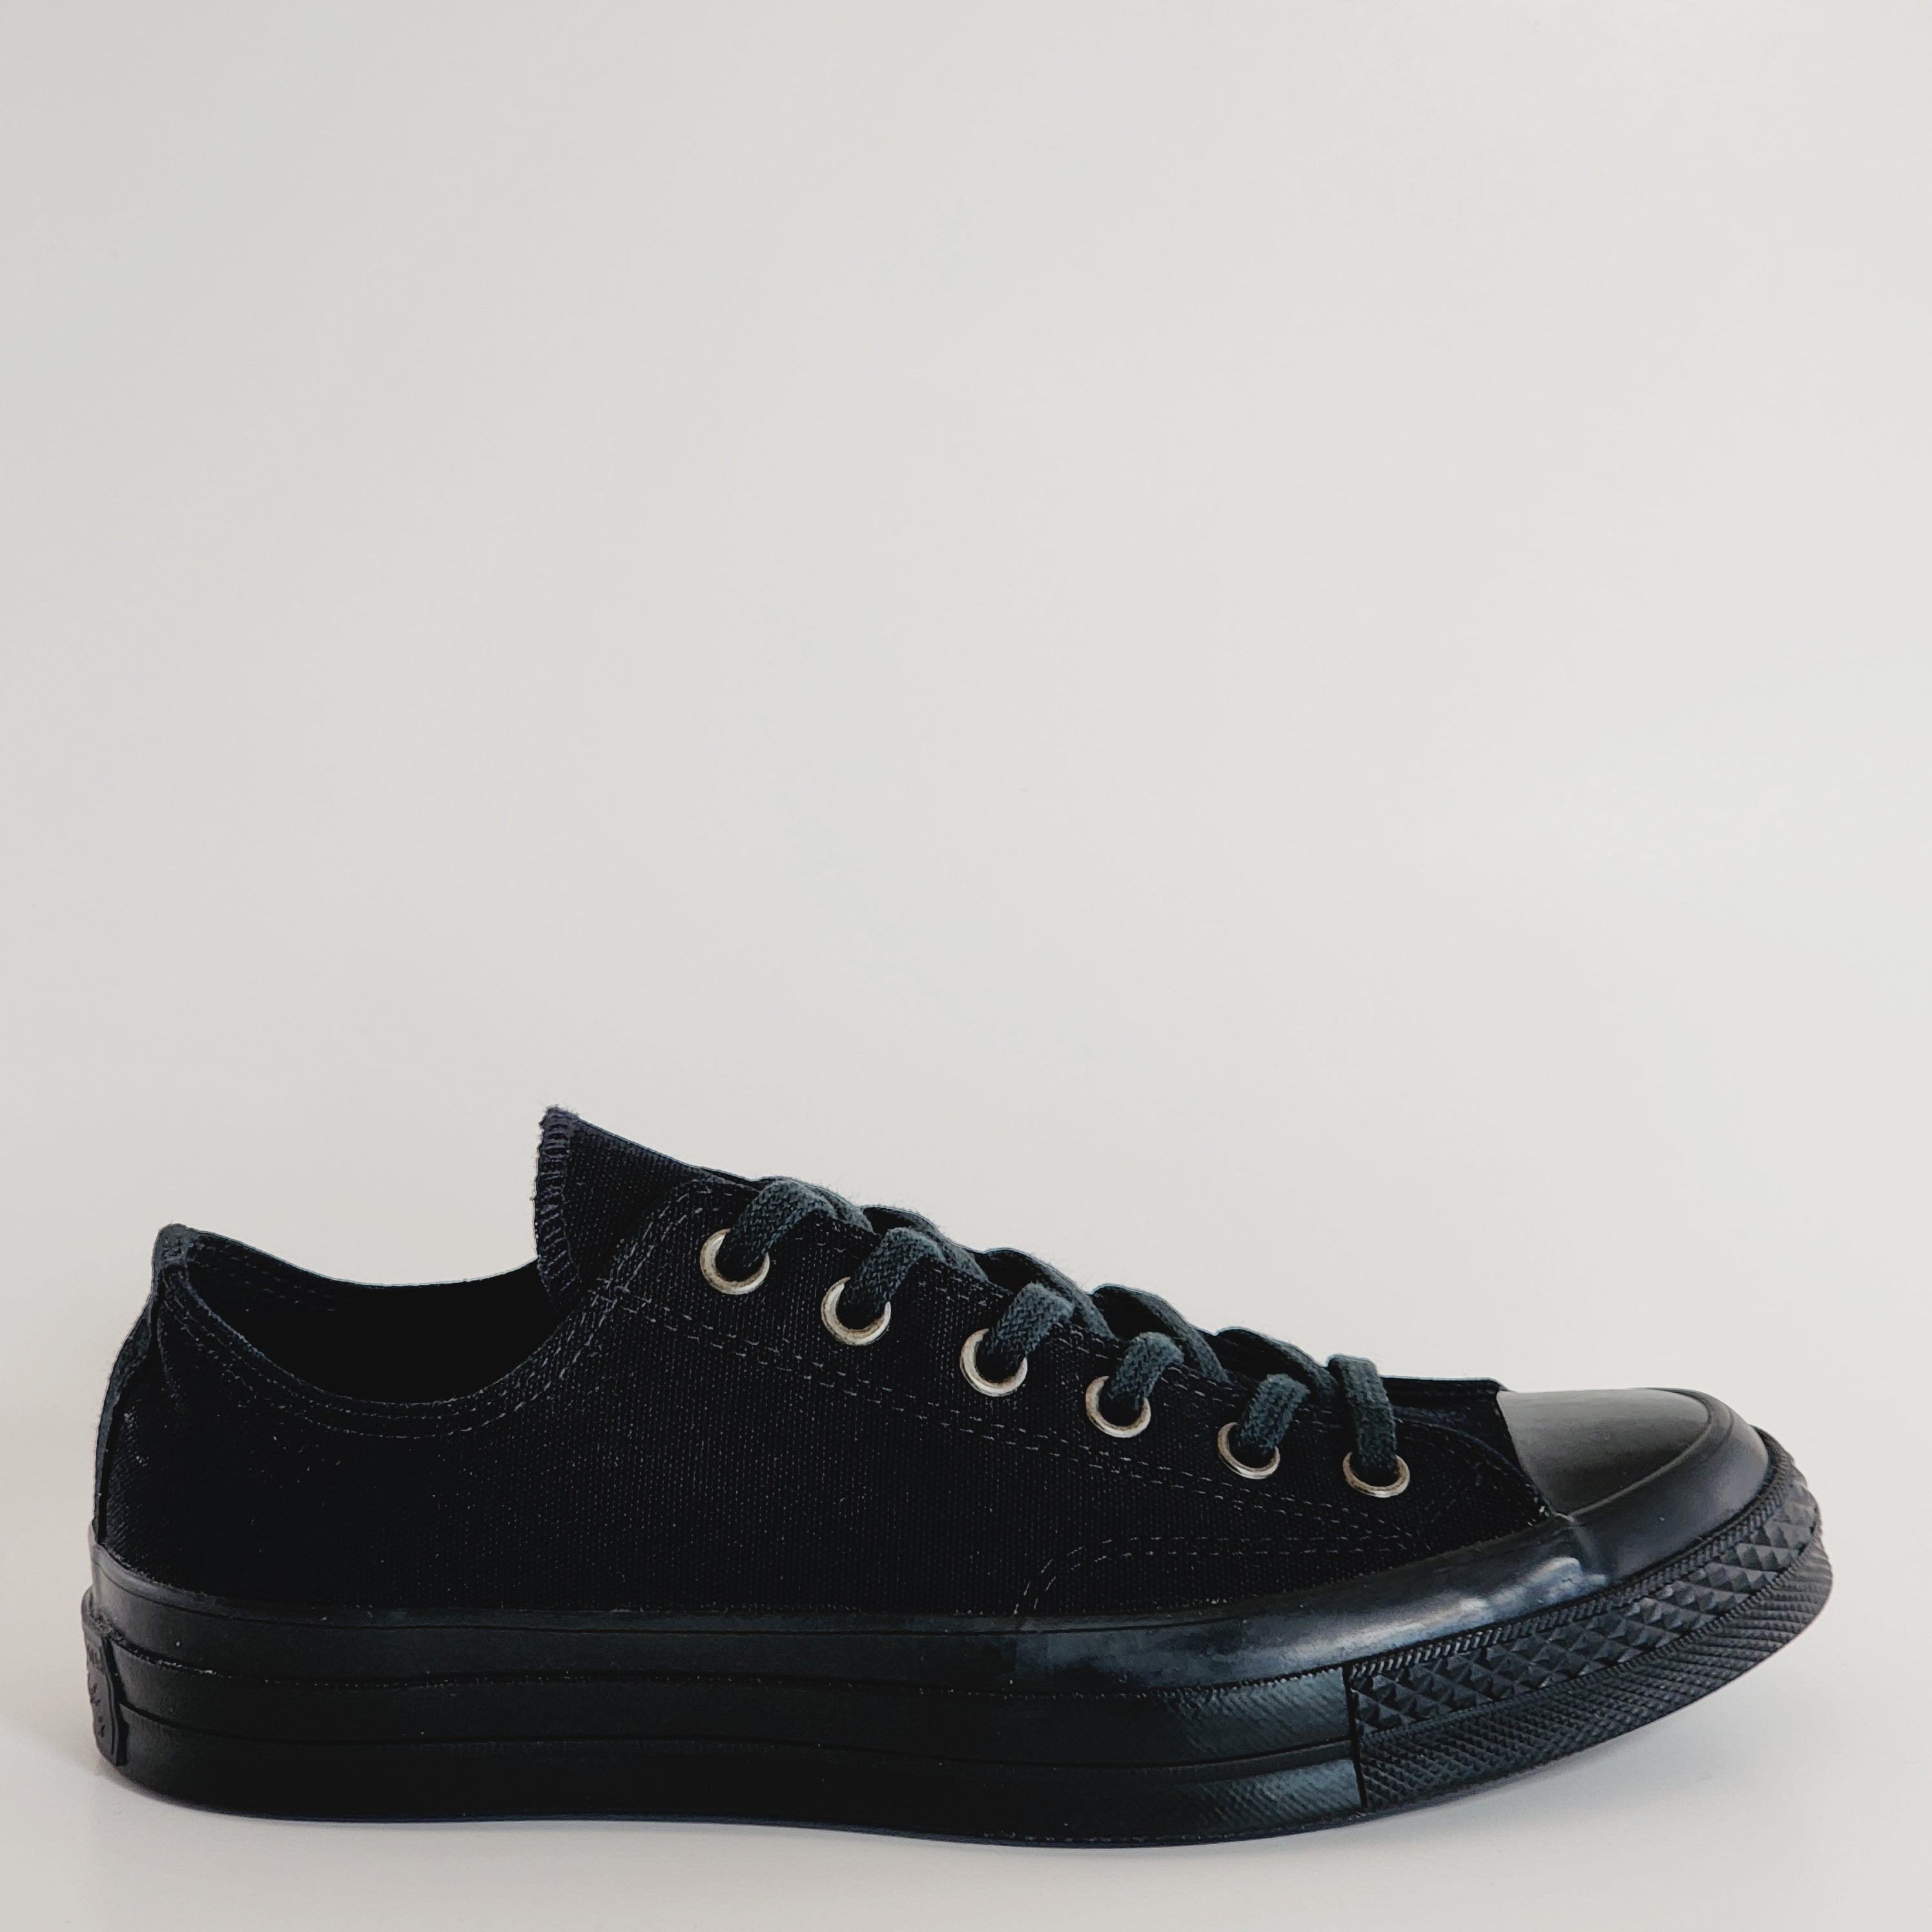 Converse Chuck 70 Low Ox 'Triple Black' Canvas Unisex Sneakers 168929C NWT